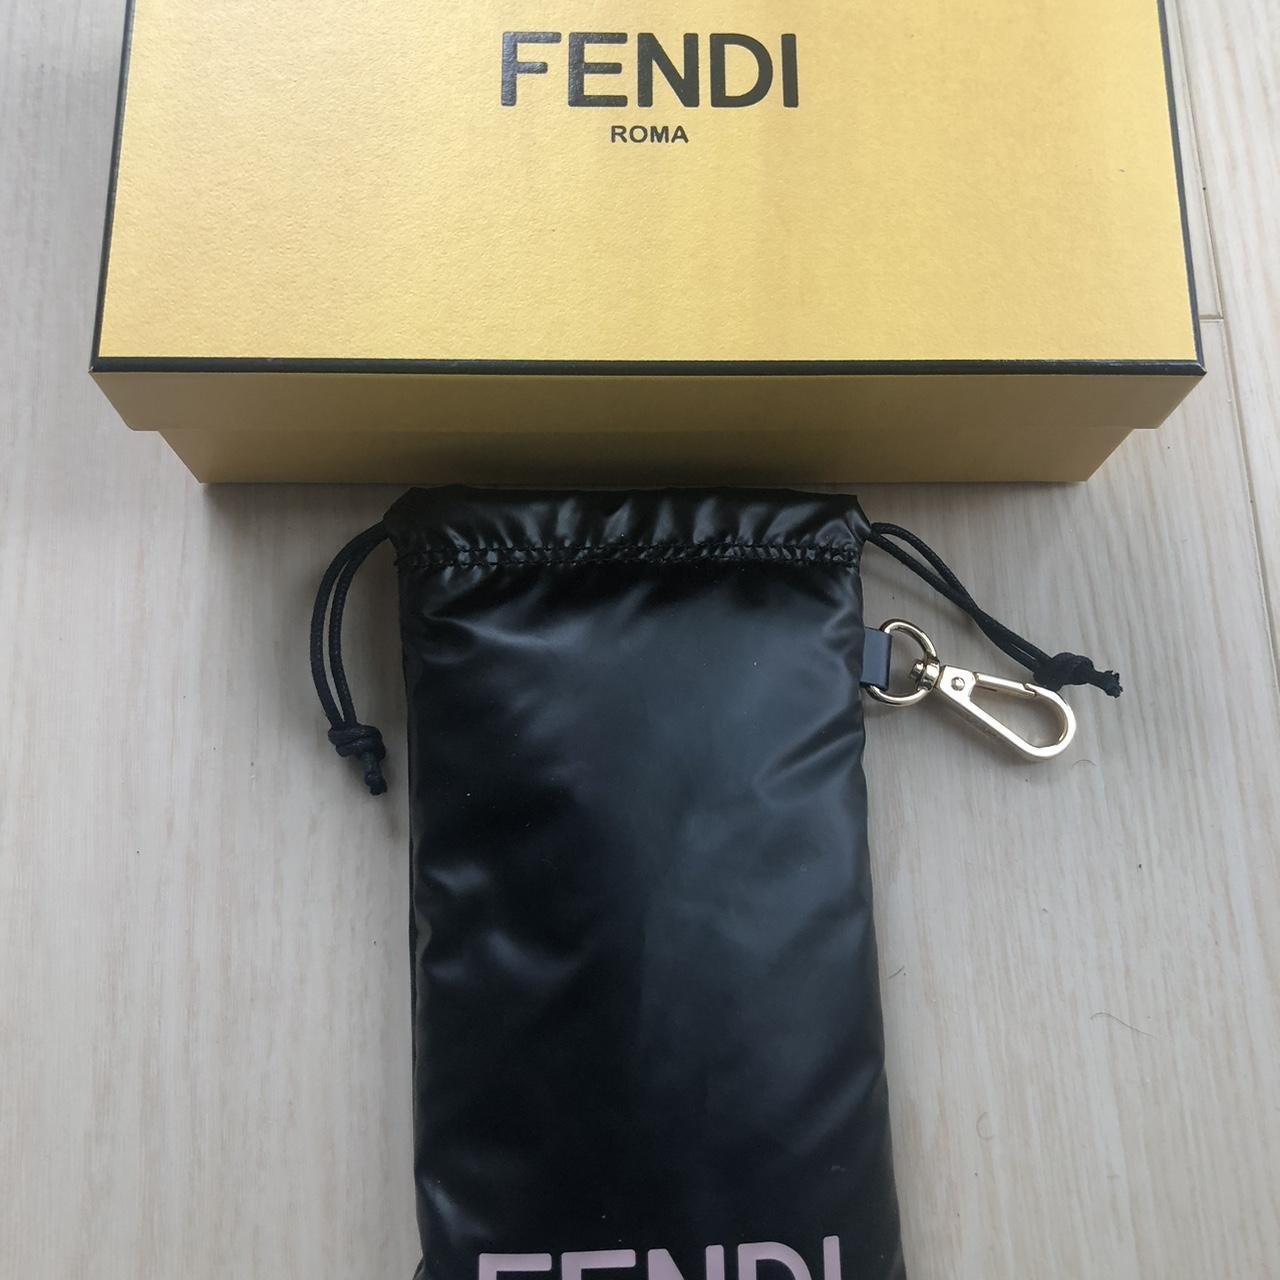 Fendi Men's Black and Tan Sunglasses (2)